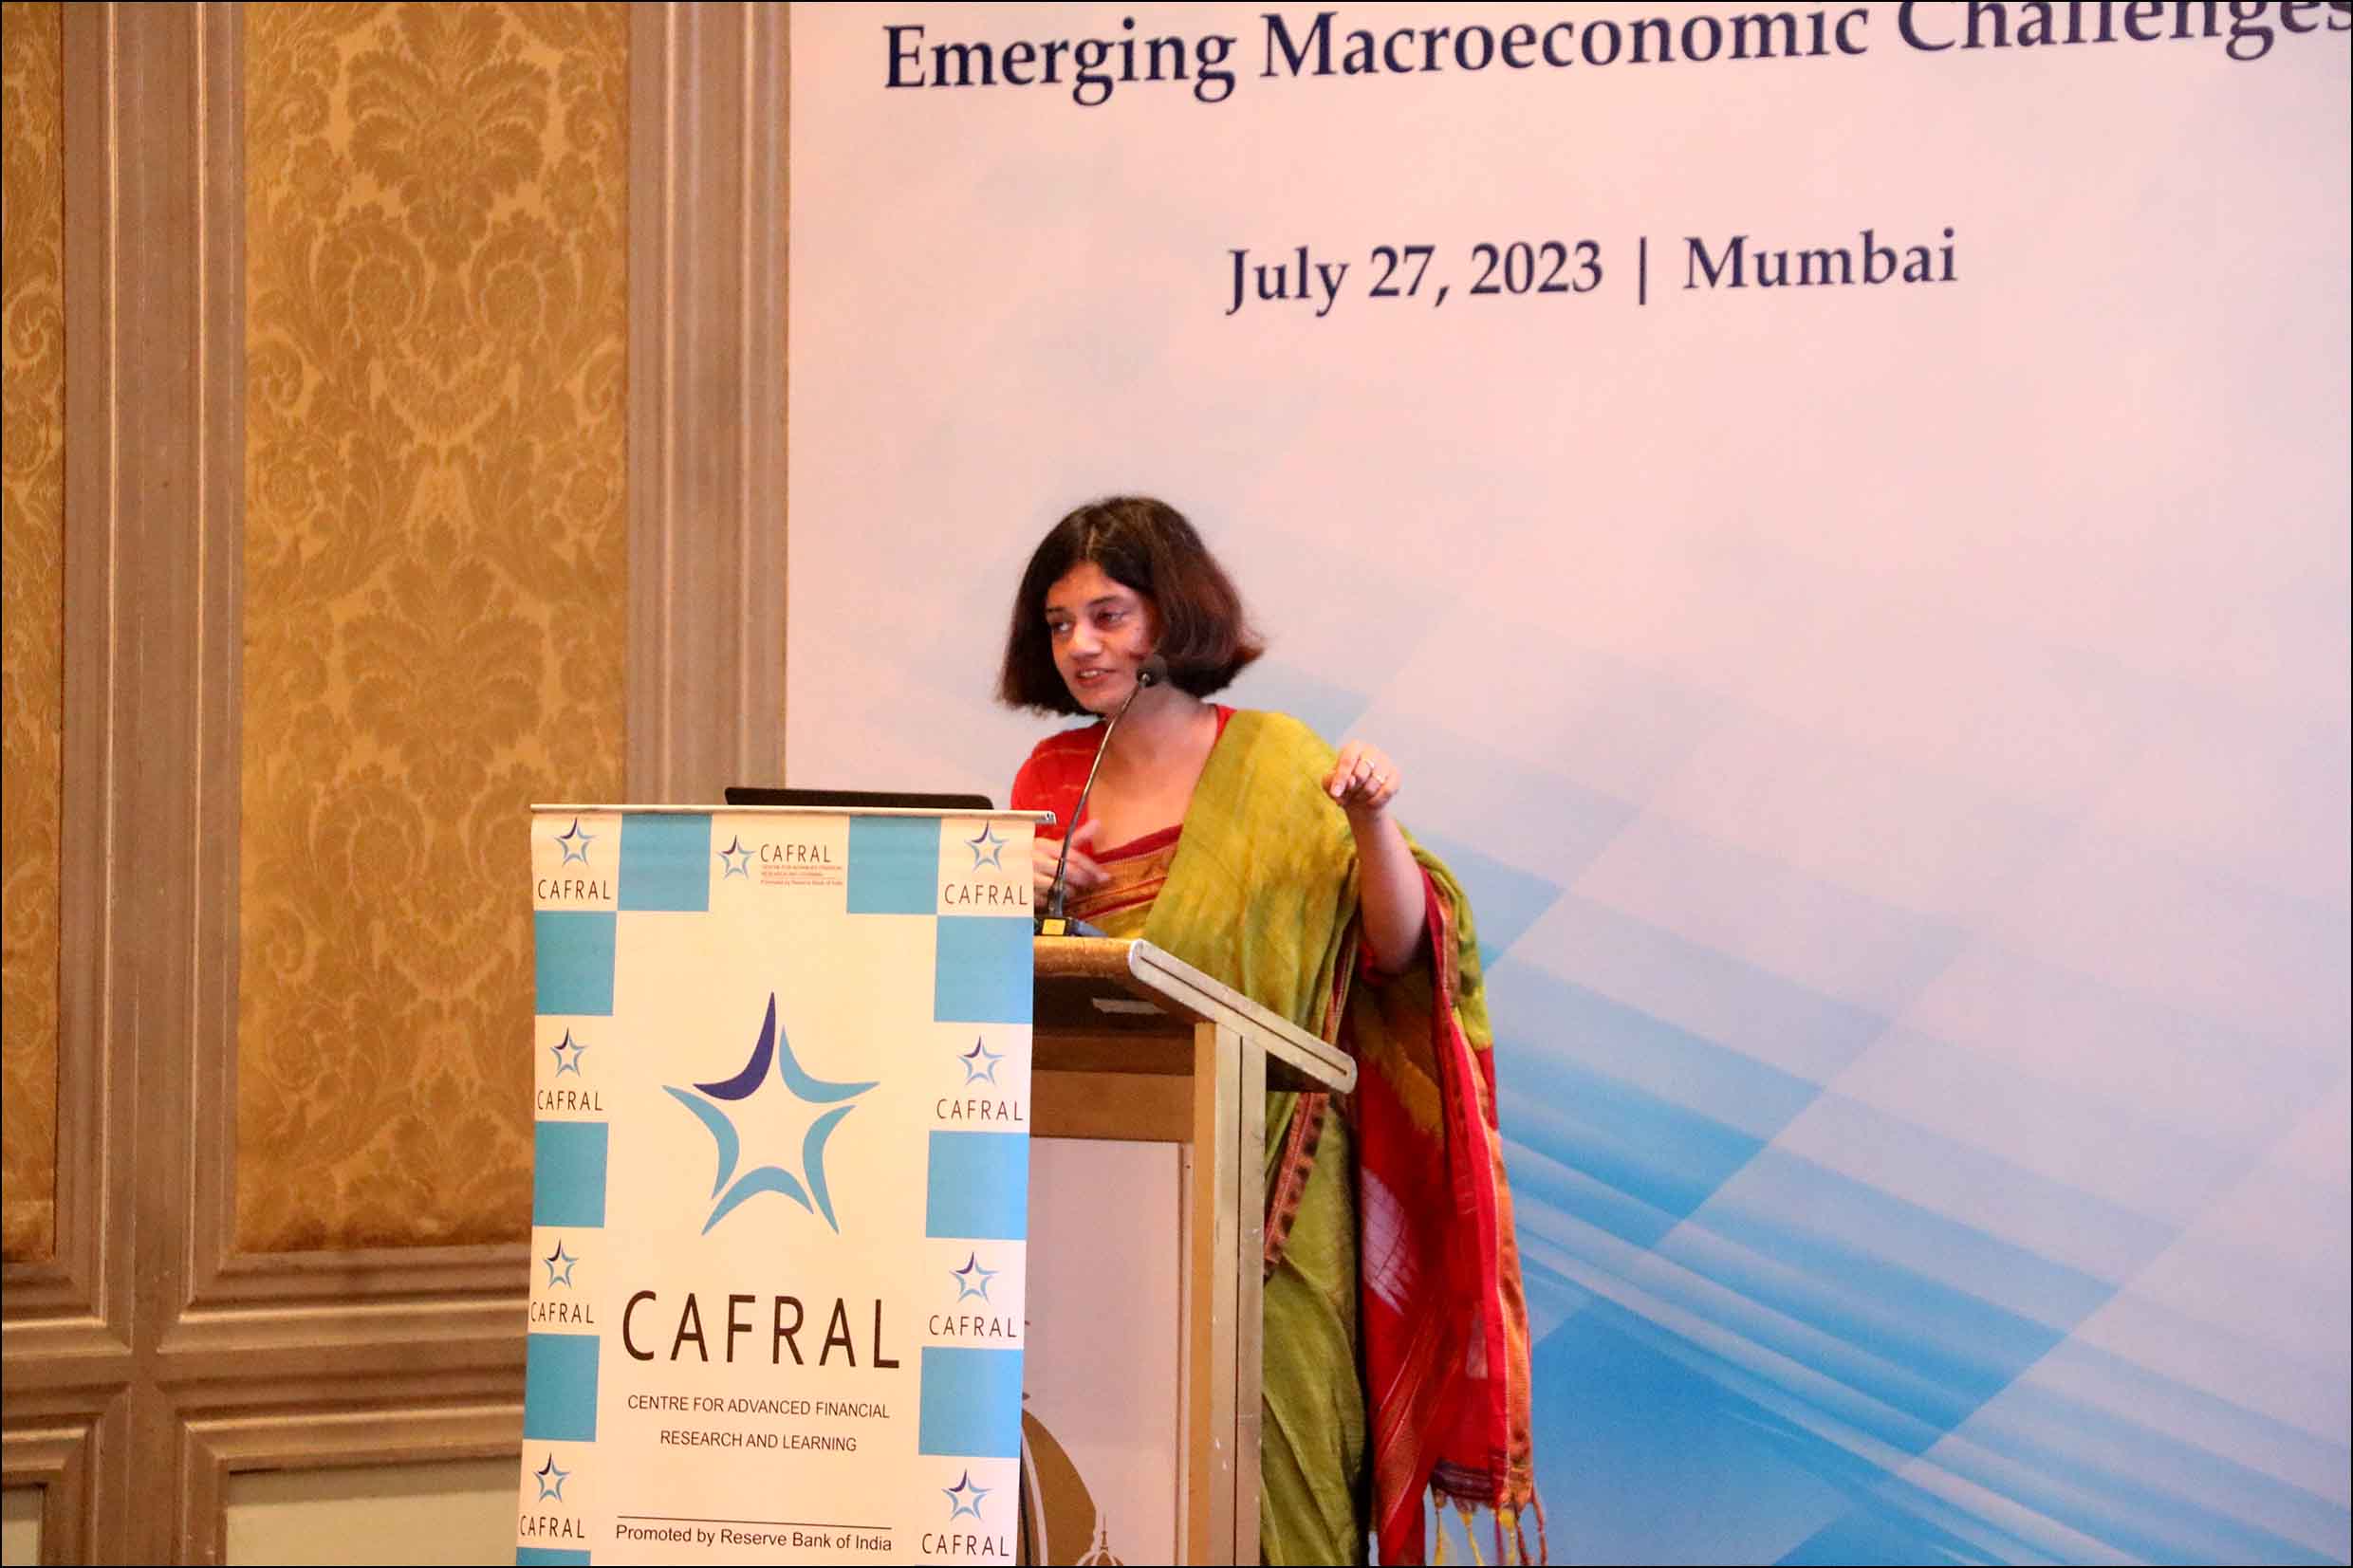 Madhura Mitra, Executive Director - Climate Change, Carbon Markets & Sustainability, PWC Ltd.